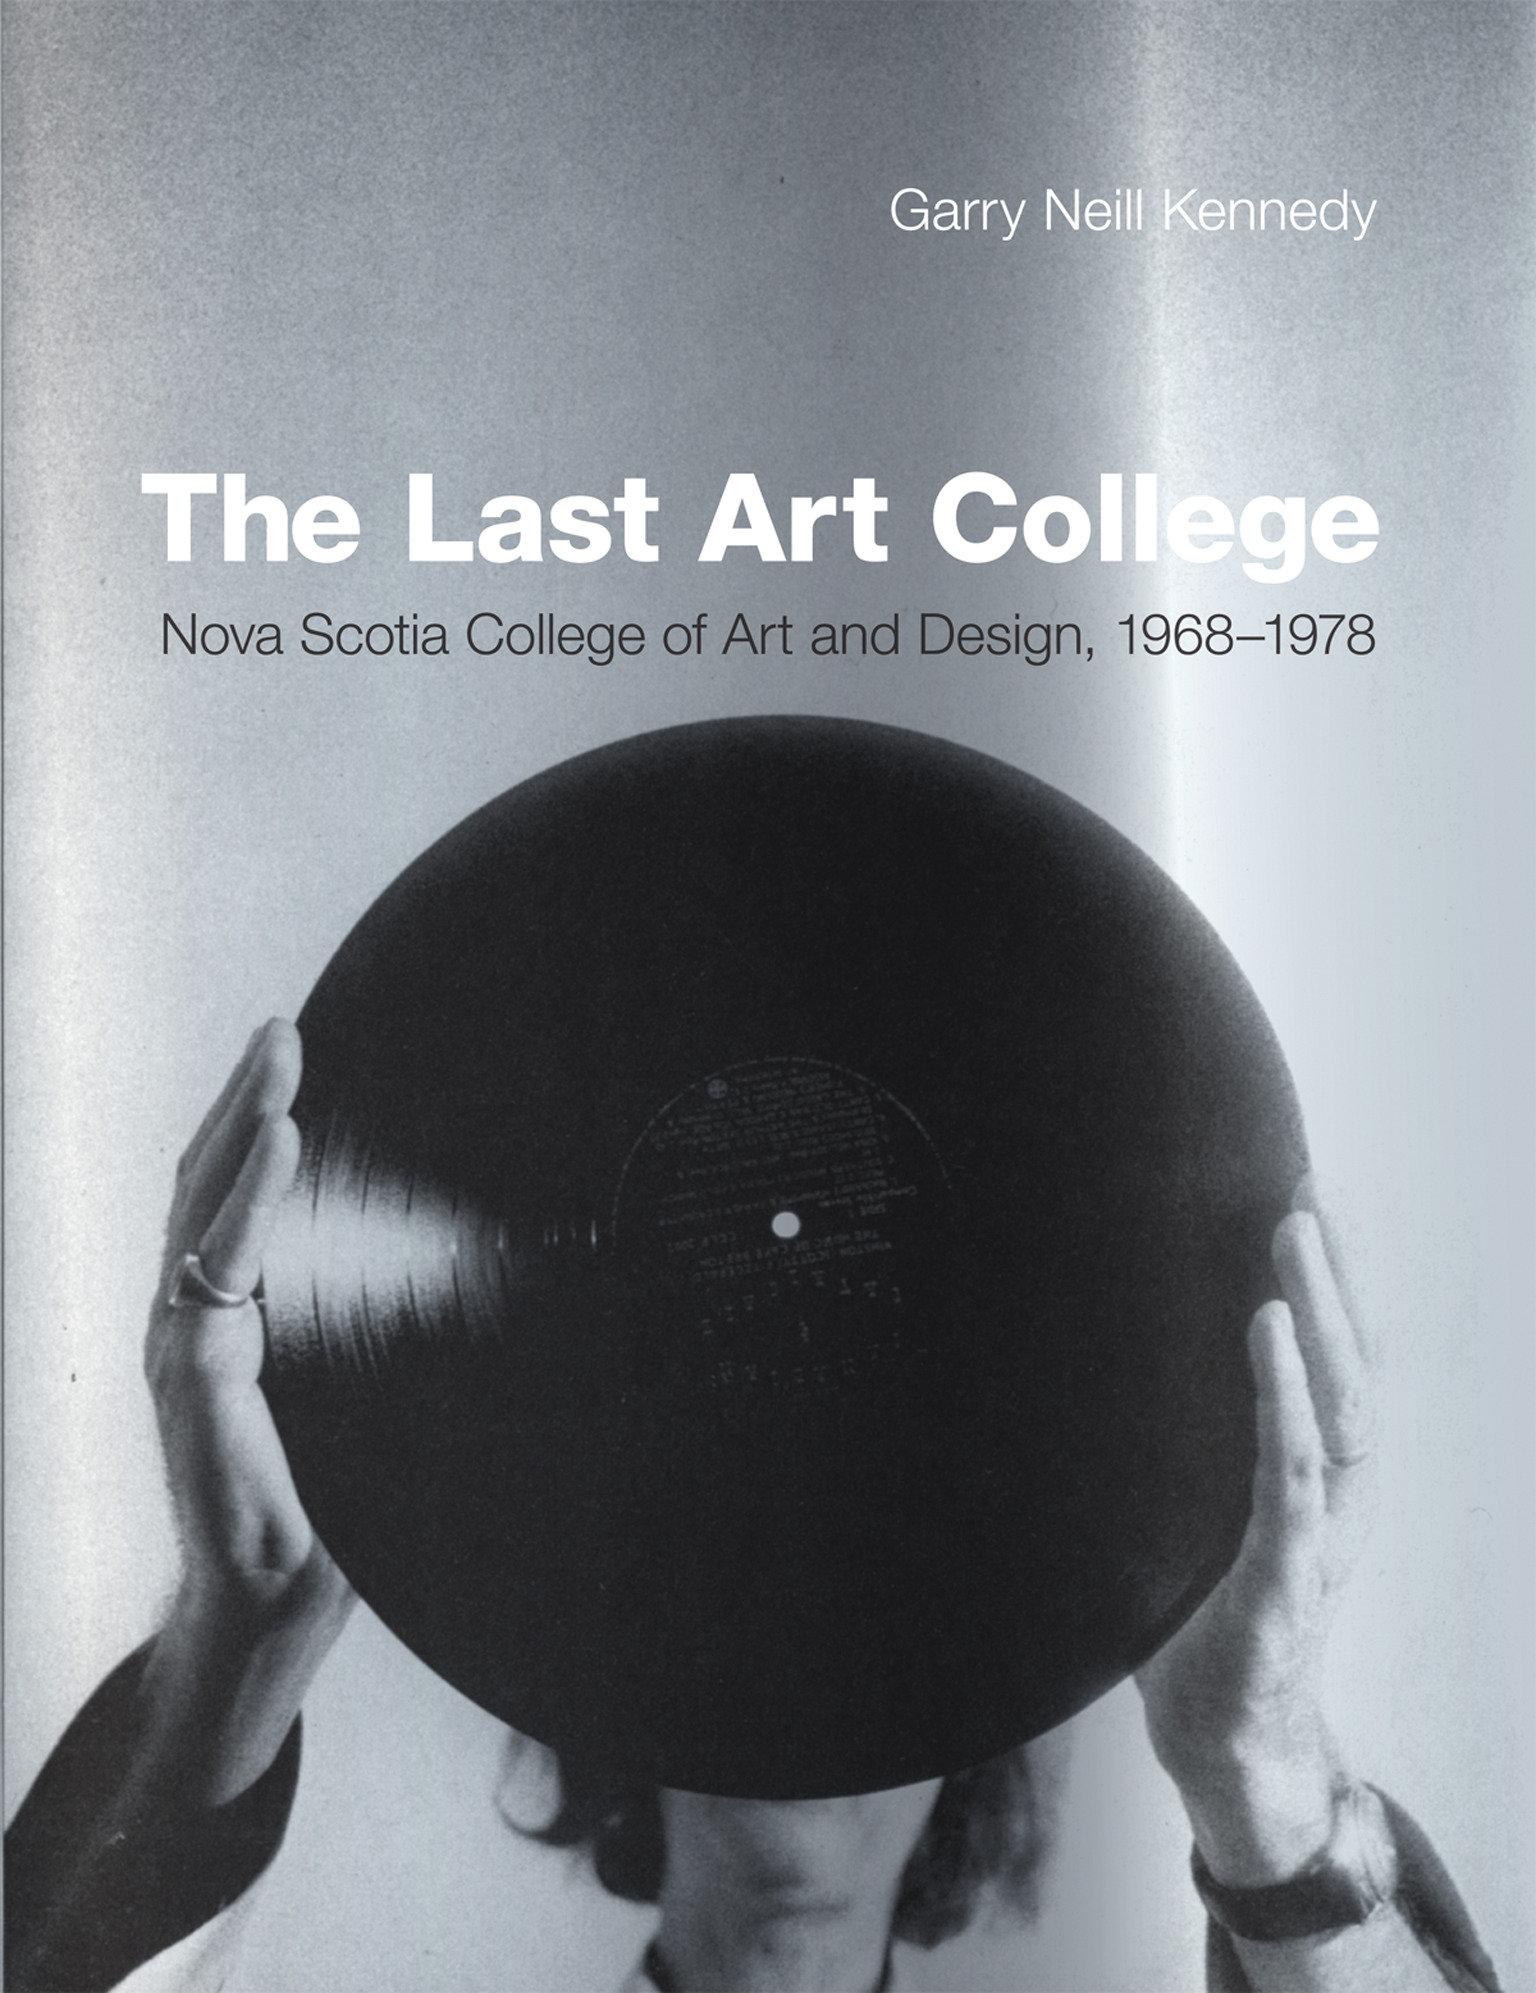 The Last Art College / Nova Scotia College of Art and Design, 1968-1978 / Garry Neill Kennedy / Buch / Einband - fest (Hardcover) / Englisch / 2012 / MIT Press Ltd / EAN 9780262016902 - Kennedy, Garry Neill